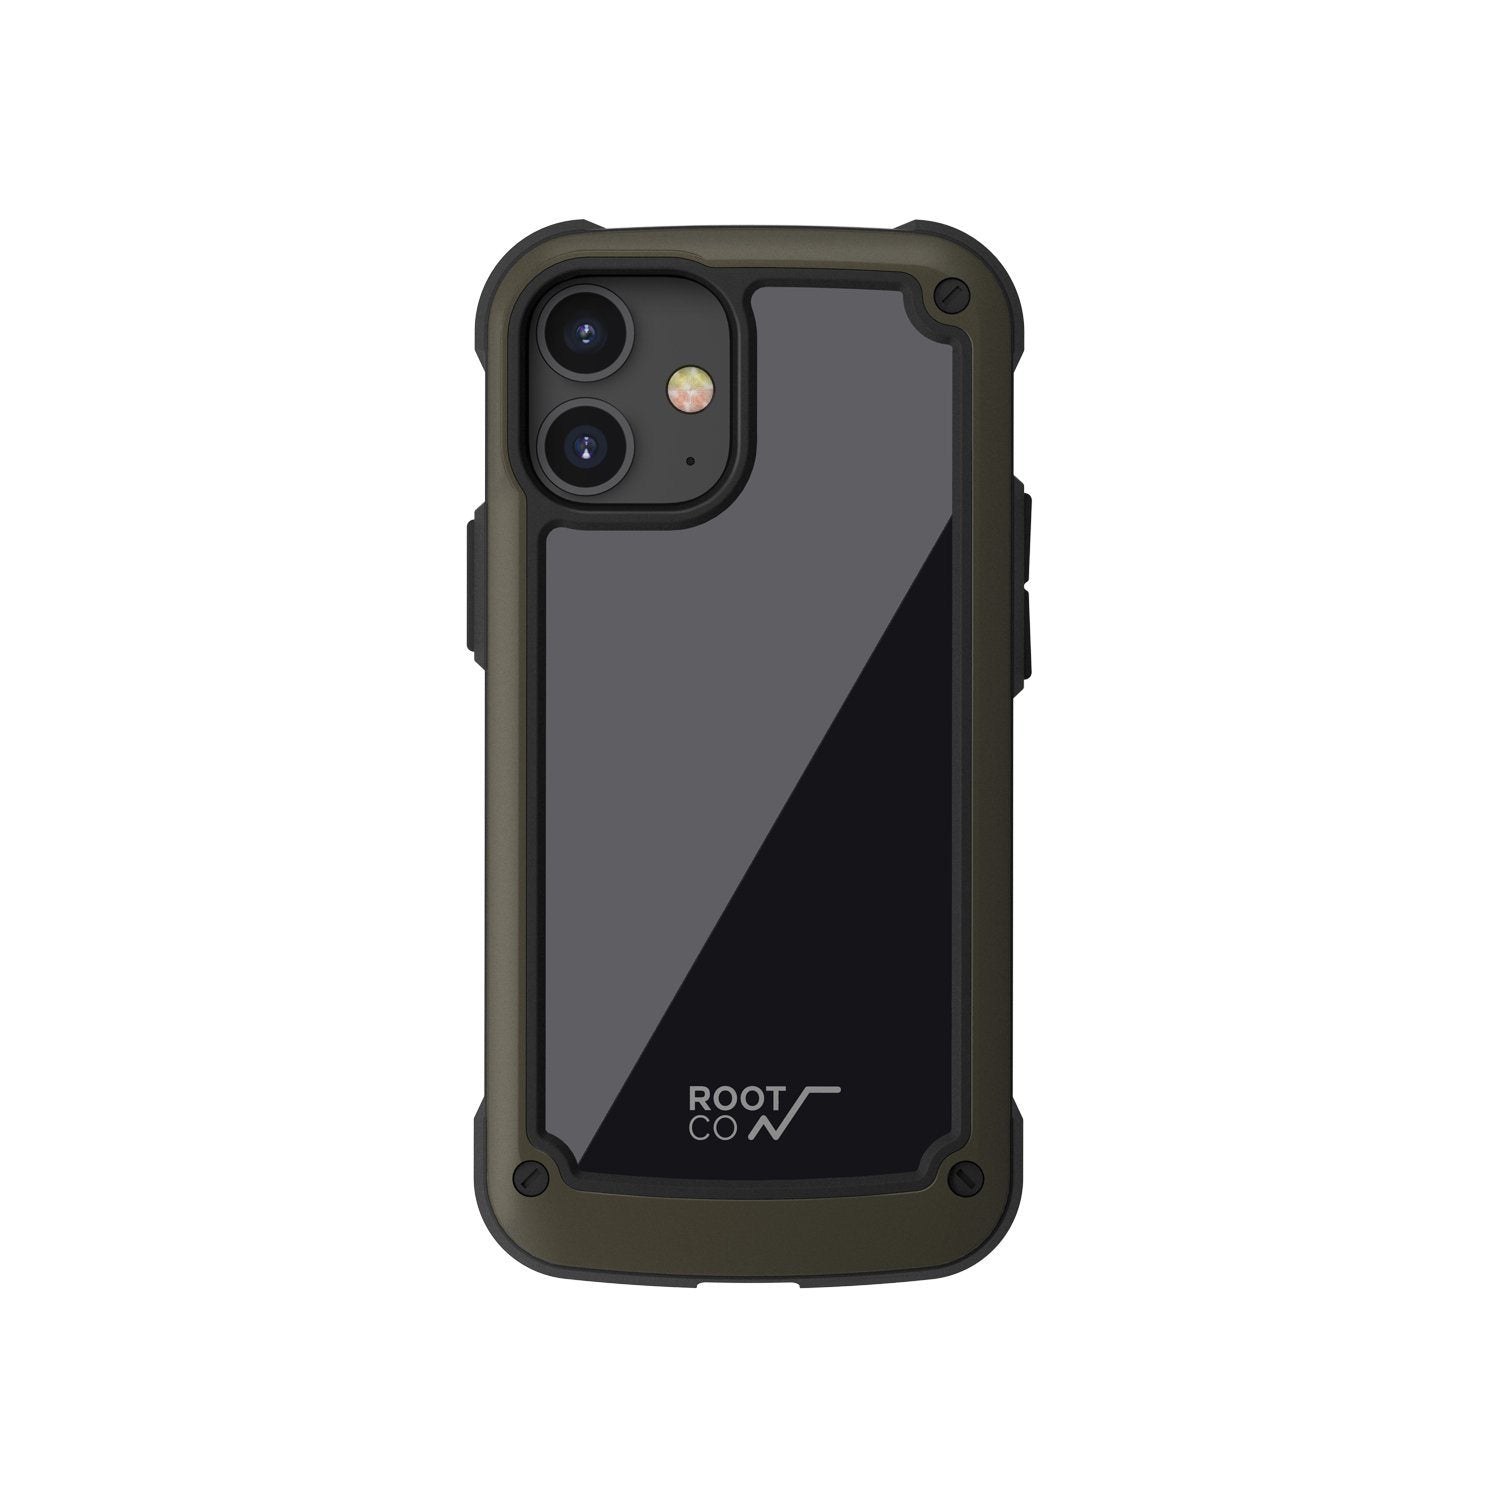 ROOT CO. Gravity Shock Resist Tough & Basic Case for iPhone 12 mini 5.4"(2020), Khaki Default ROOT CO. 